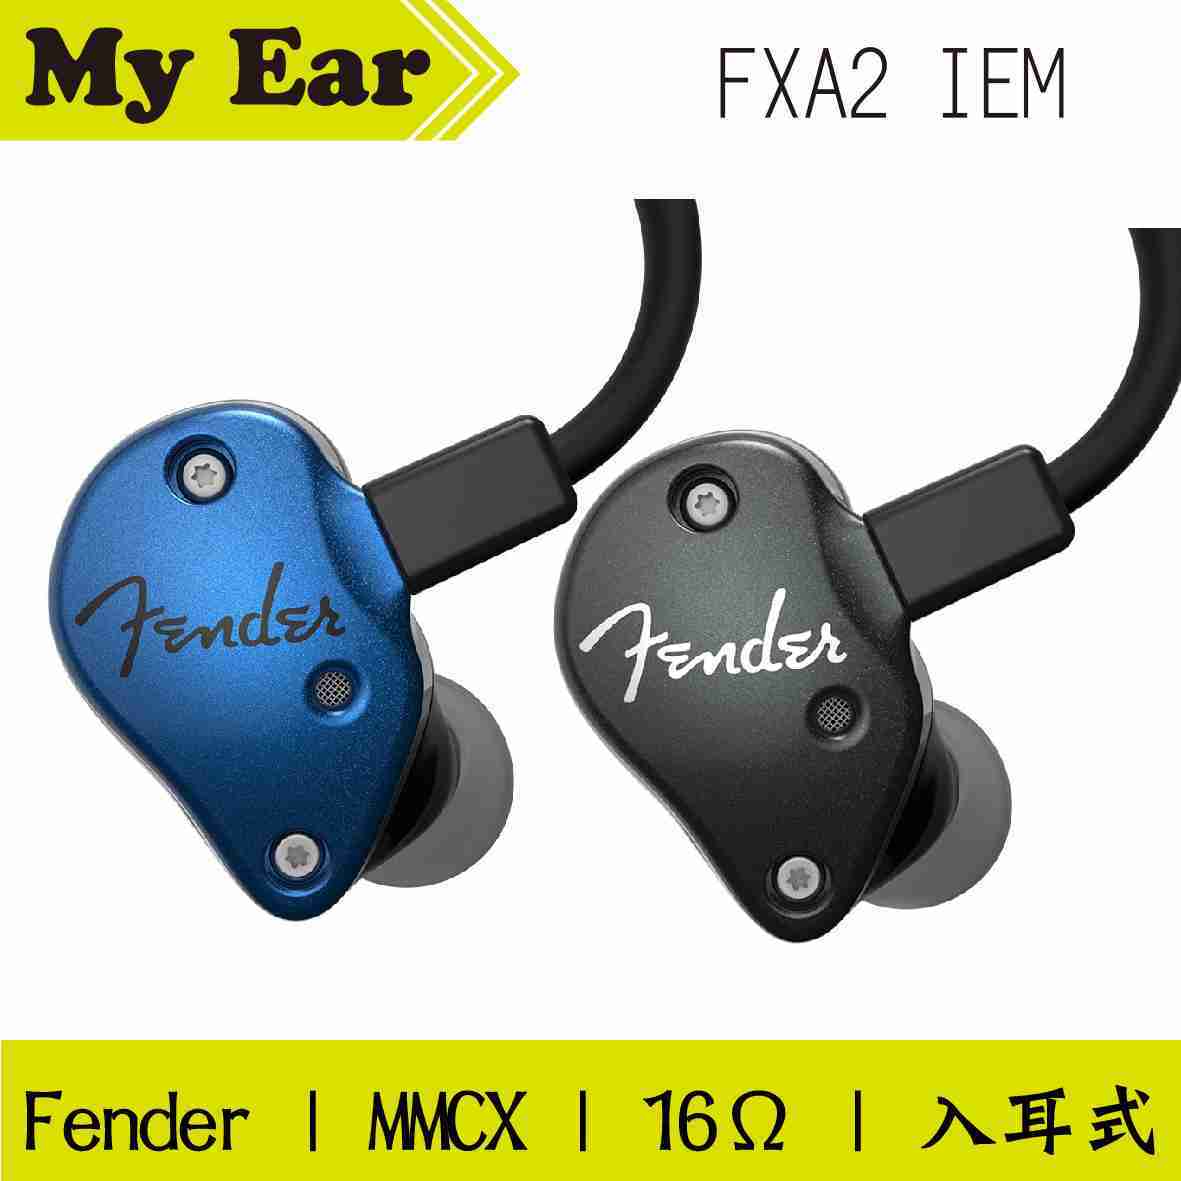 Fender FXA2 IEM 入耳式 監聽級 耳機 16Ω 兩色可選 | My Ear耳機專門店